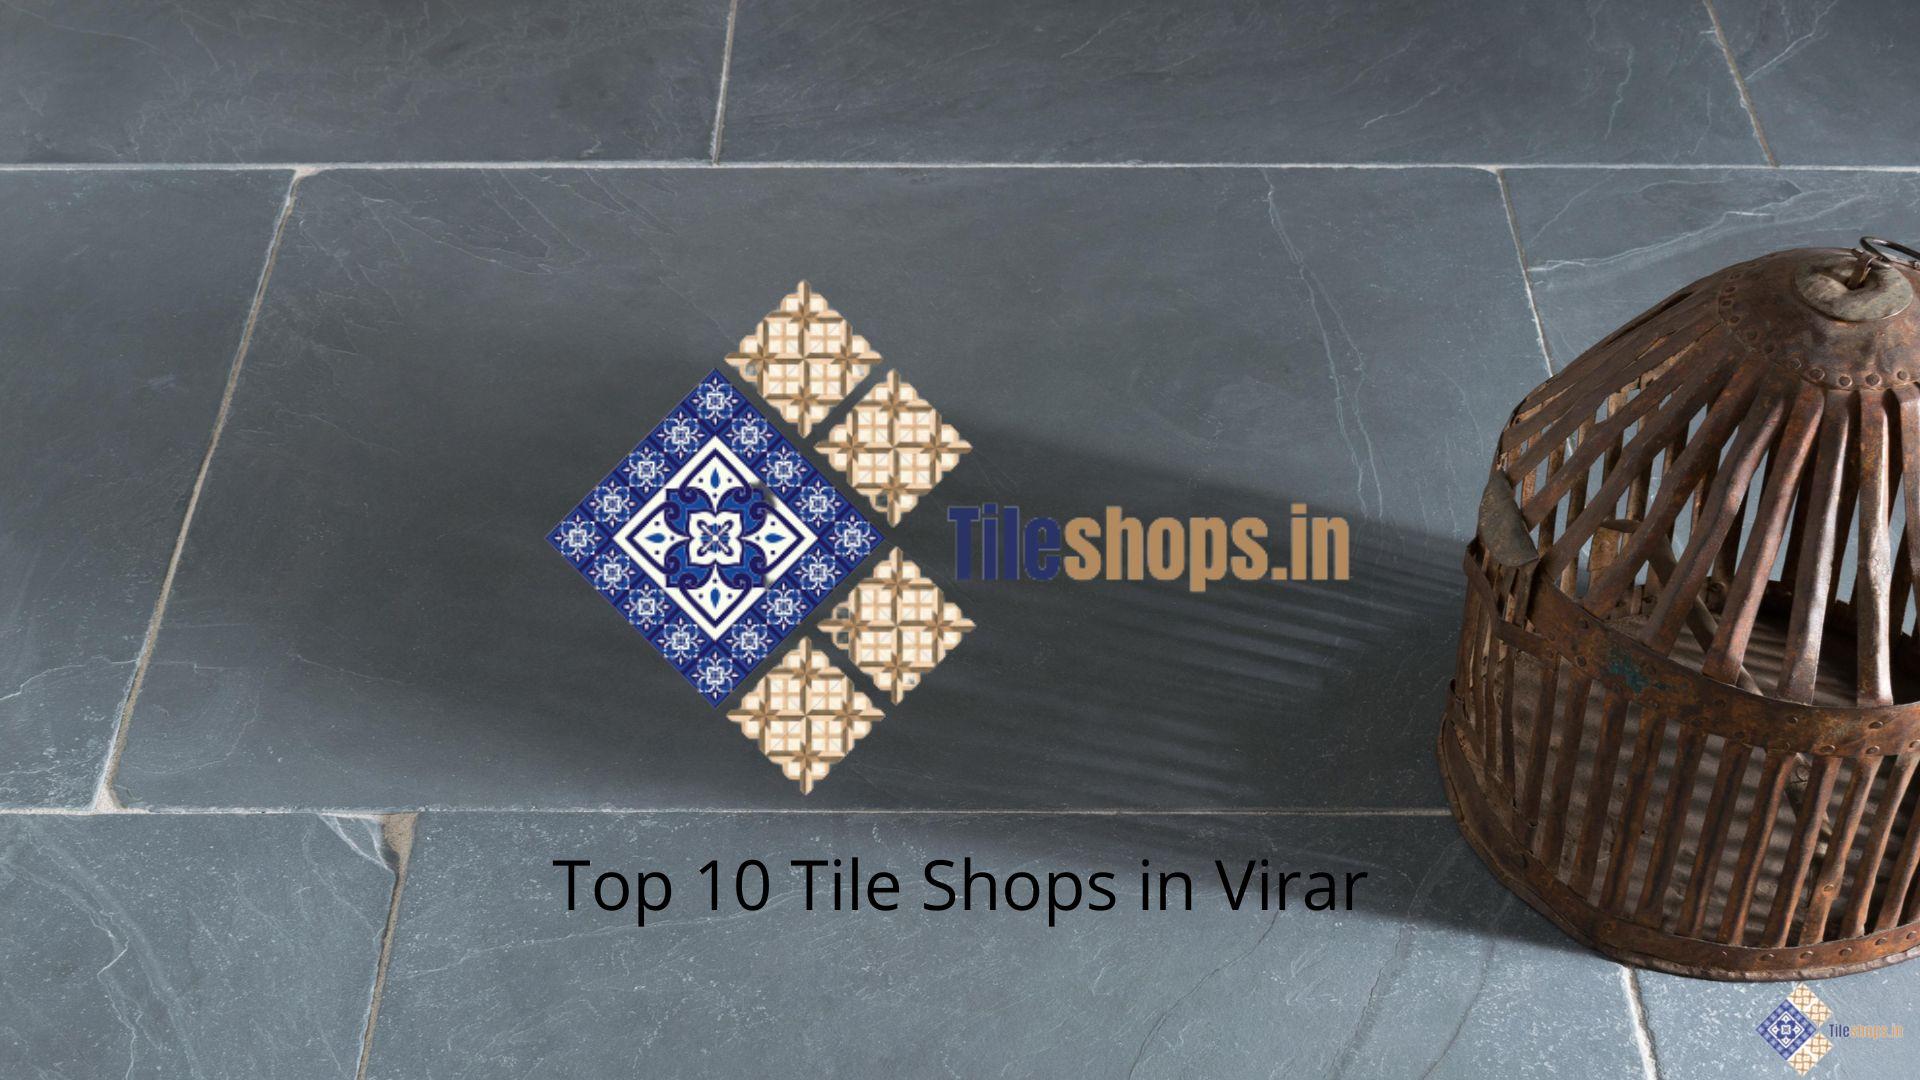 Top 10 Tile Shops in Virar